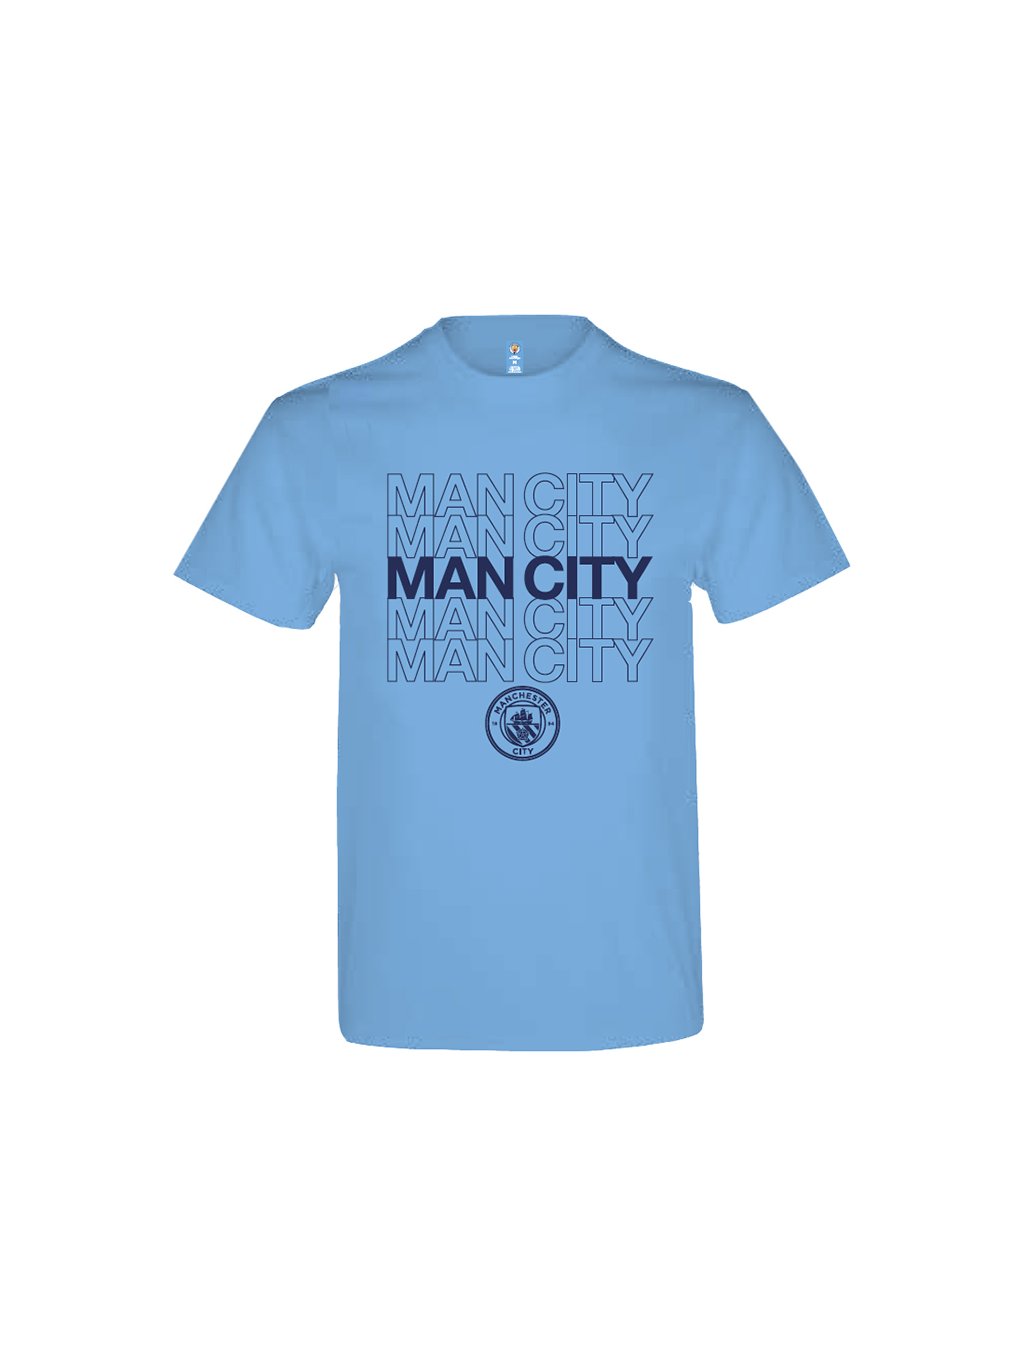 man city logo t shirt sky blue adults